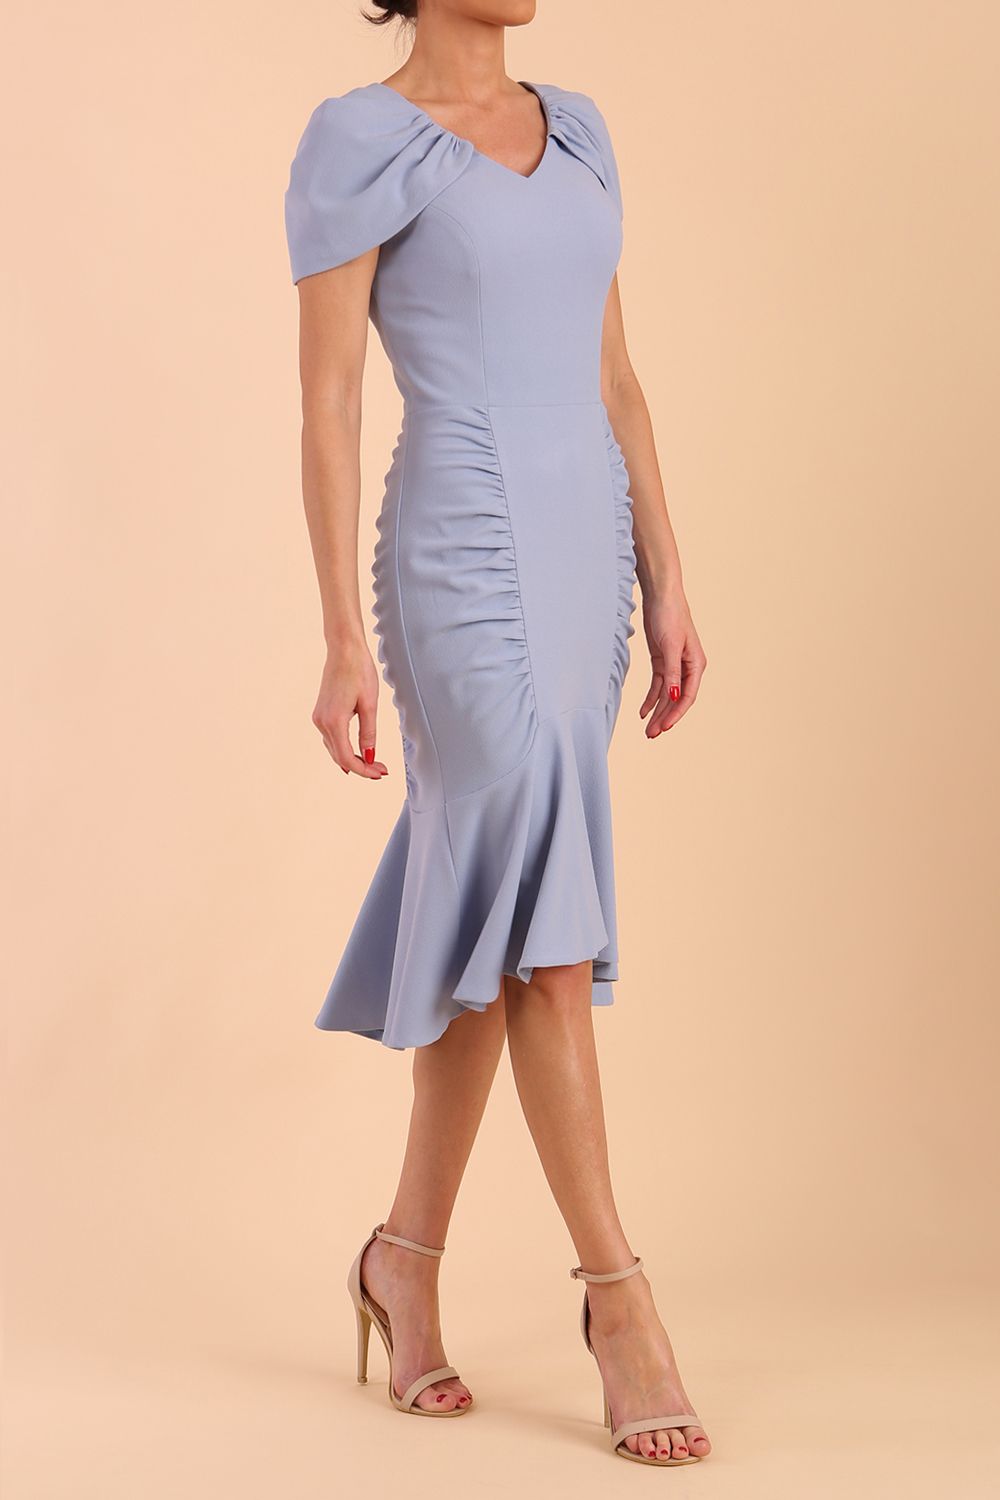 Model wearing diva catwalk Seraphina Fishtail skirt dress in Powder Blue front side